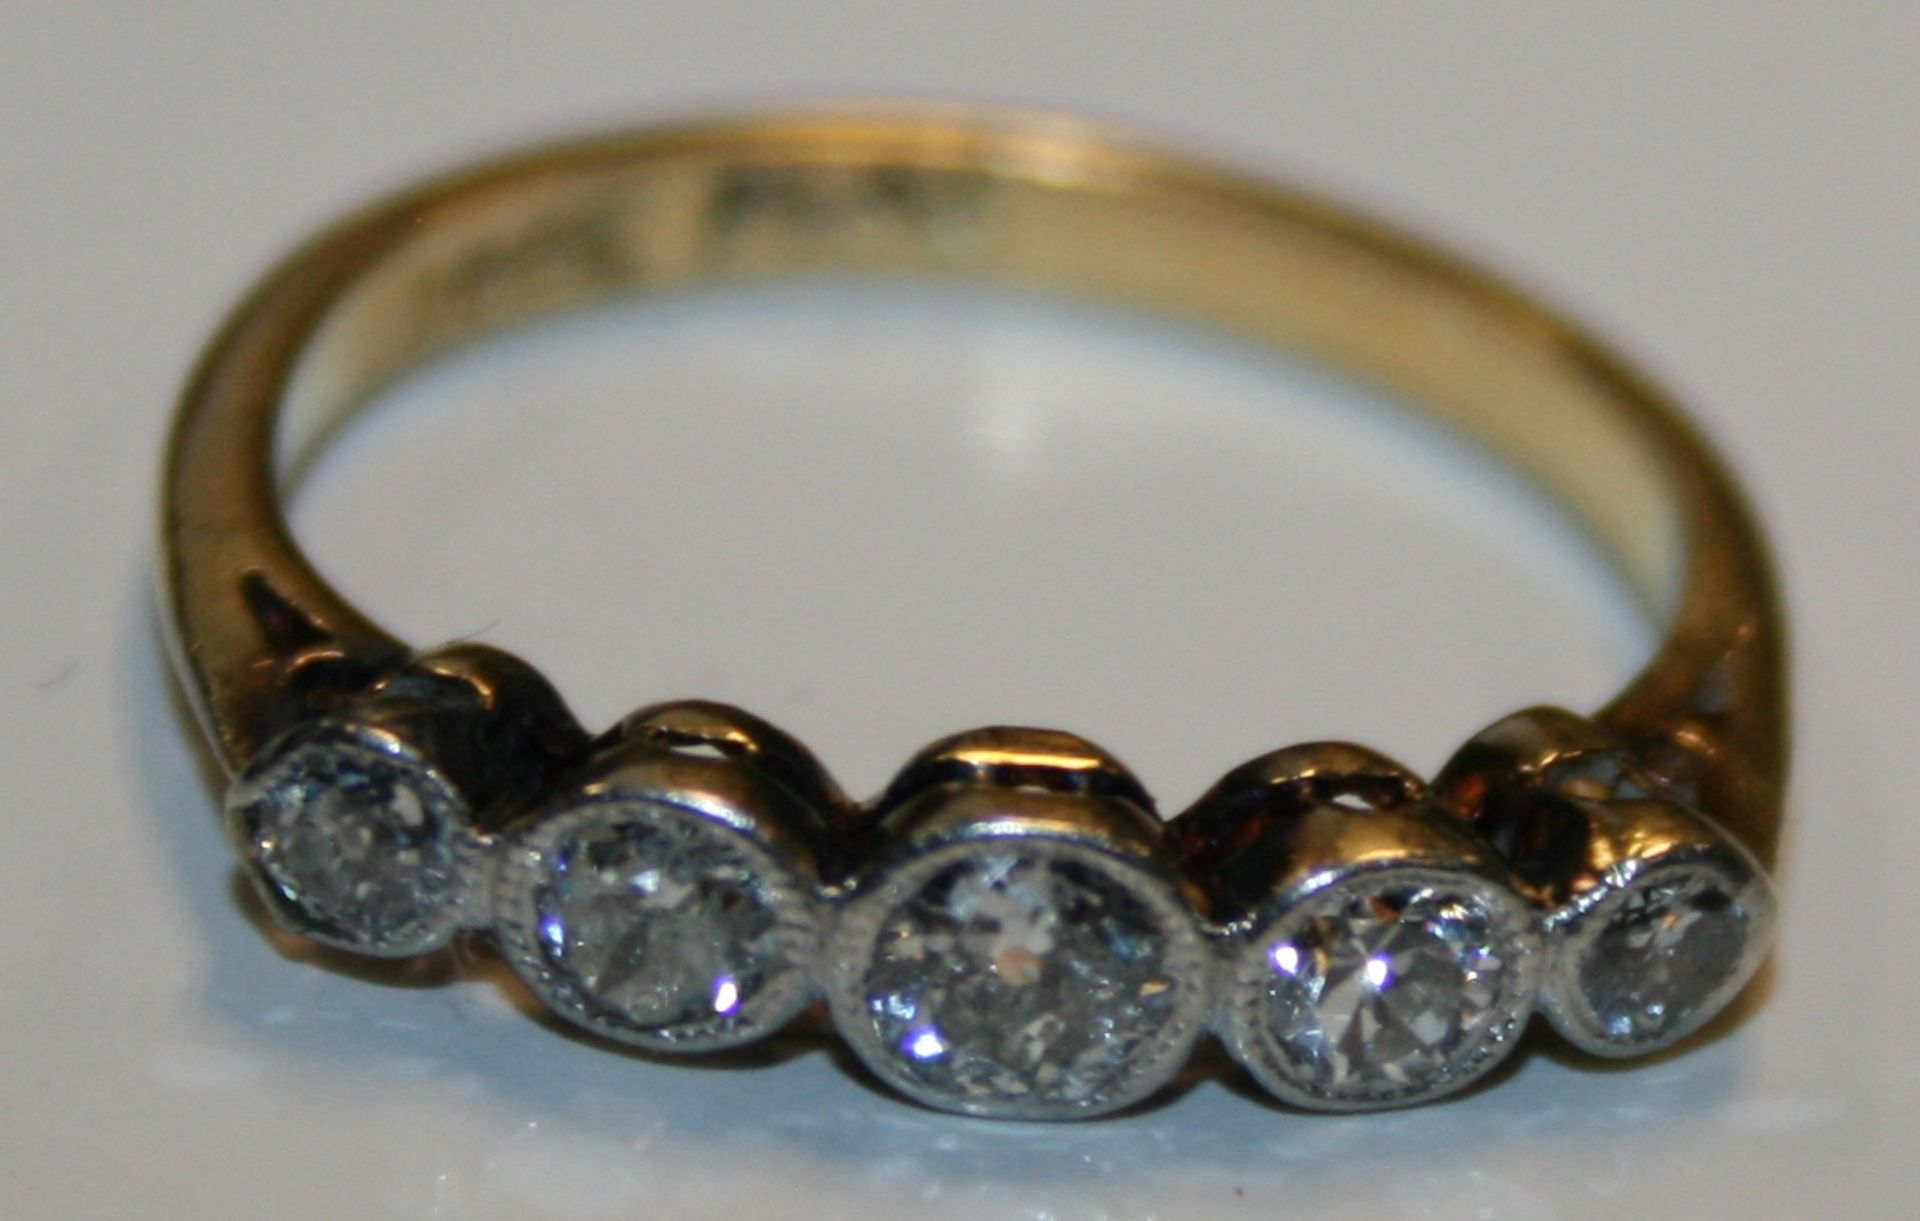 Diamond Five Stone 18ct Yellow Gold & Platinum Ring